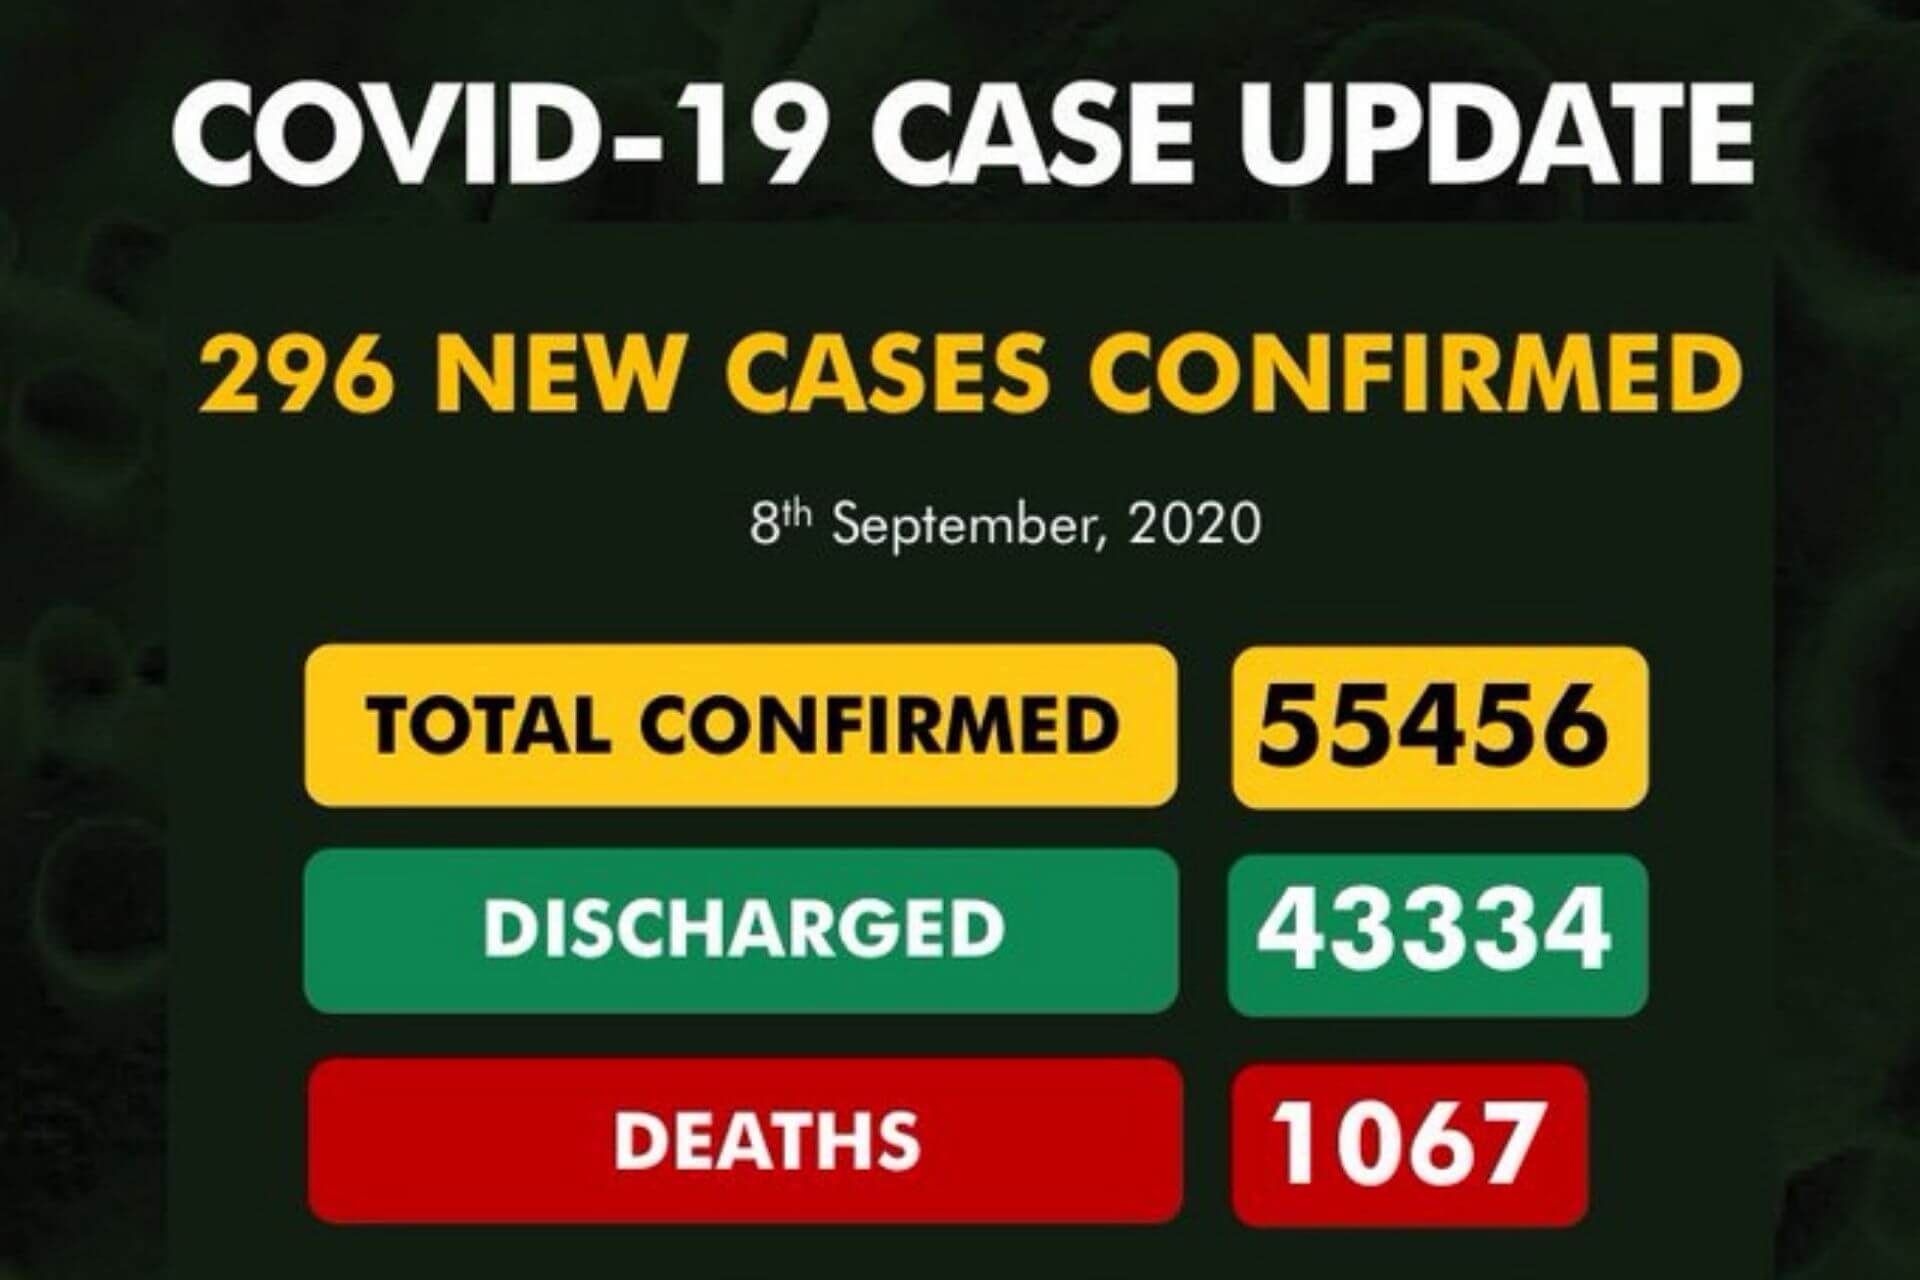 Coronavirus Nigeria update: 296 new cases of COVID-19 confirmed in Nigeria